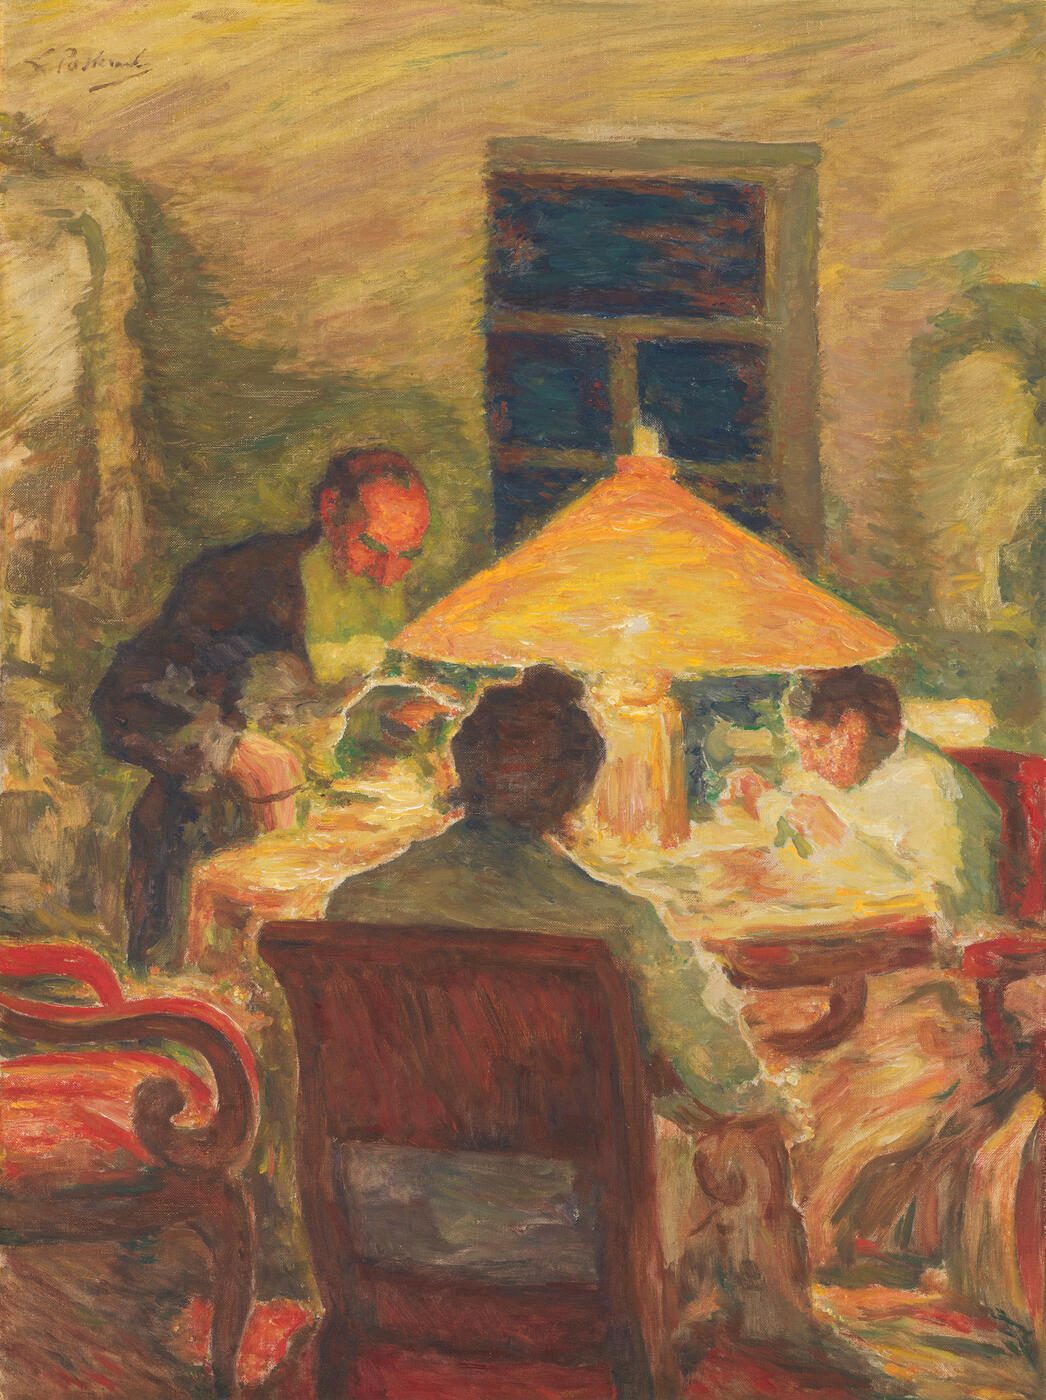 Leo Tolstoy with His Family